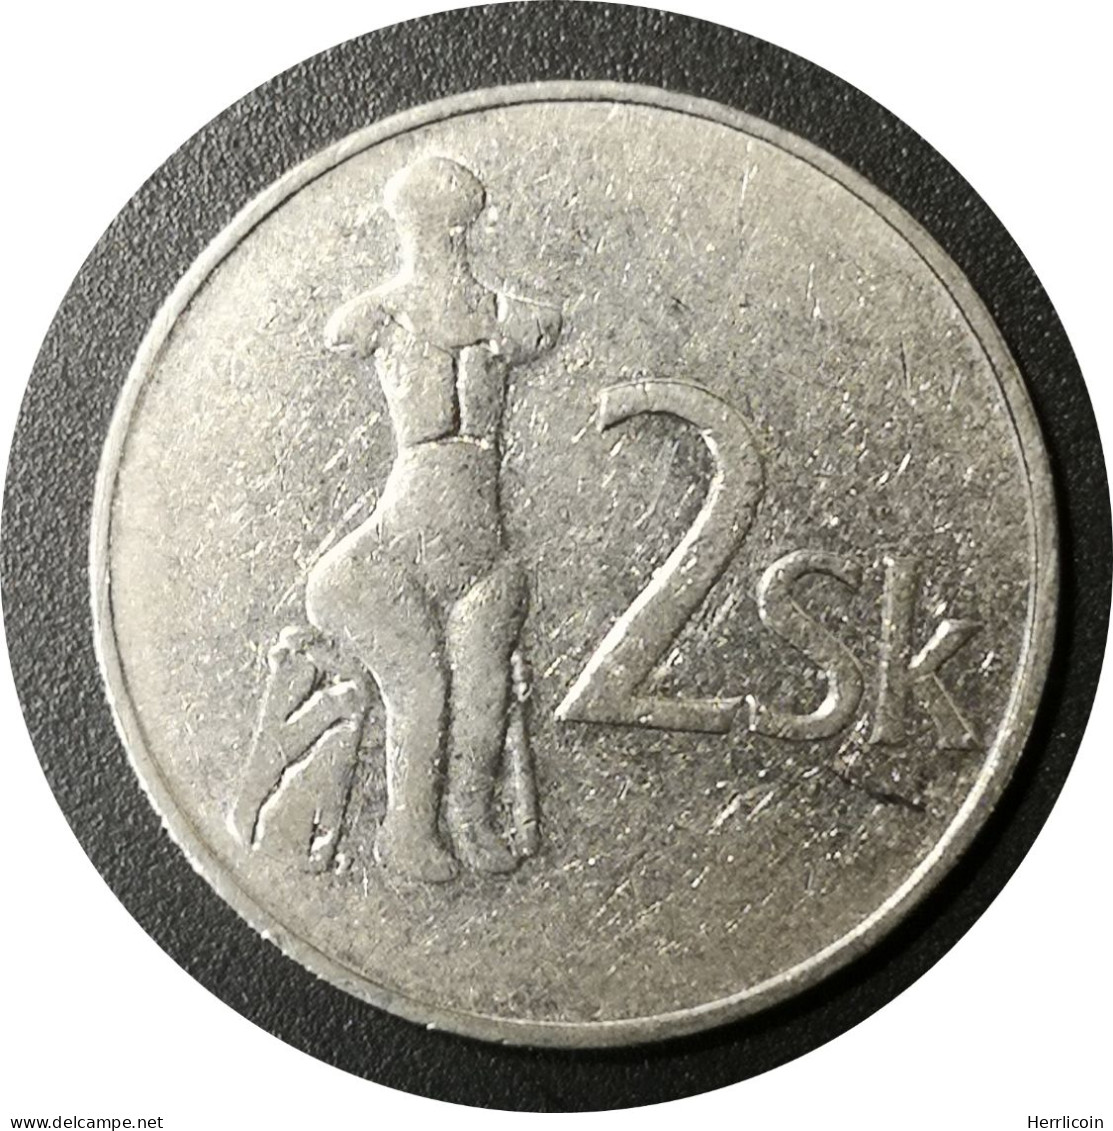 Monnaie Slovaquie - 1993 - 2 Koruny - Slovakia